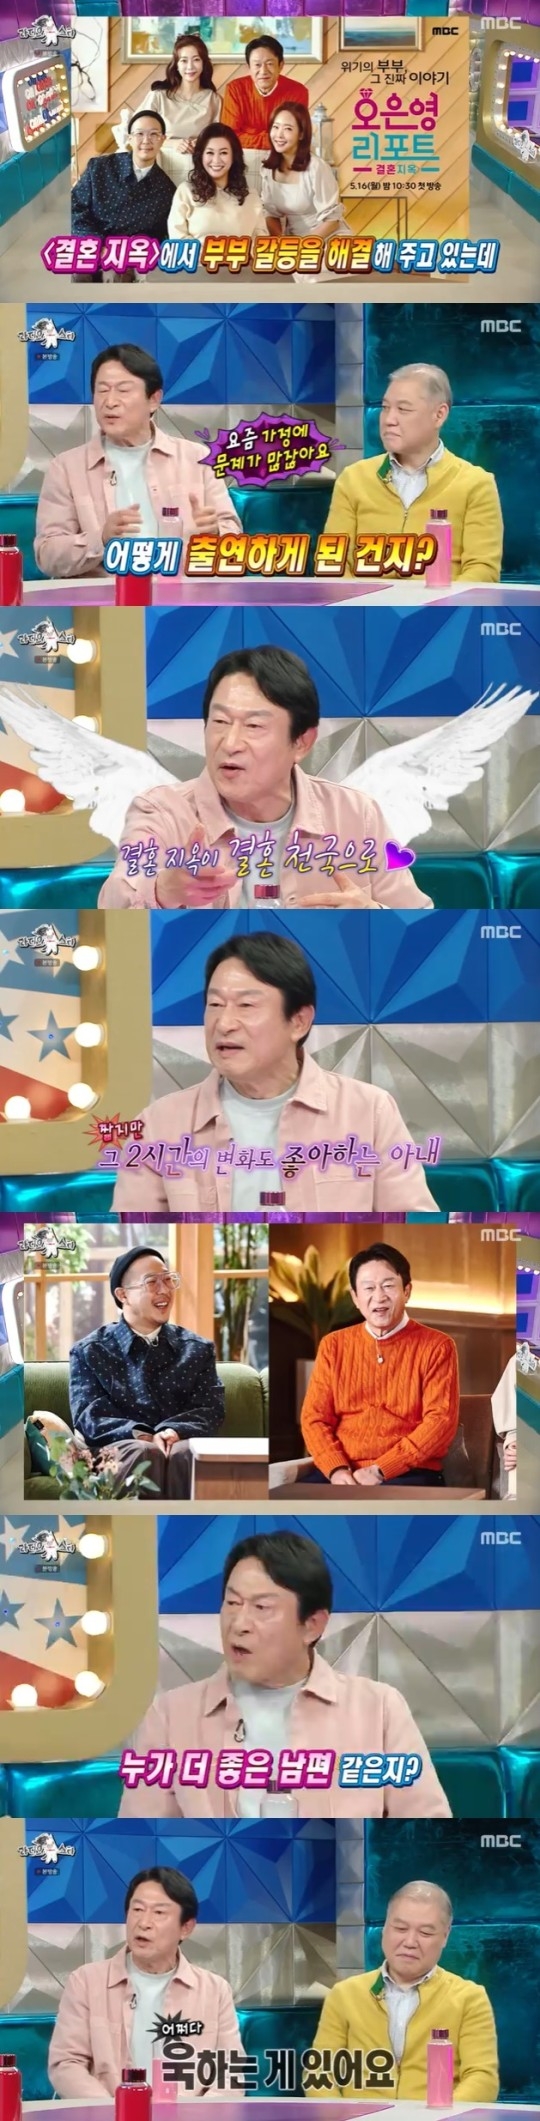 MBC 예능 프로그램 ‘라디오스타’ 제공